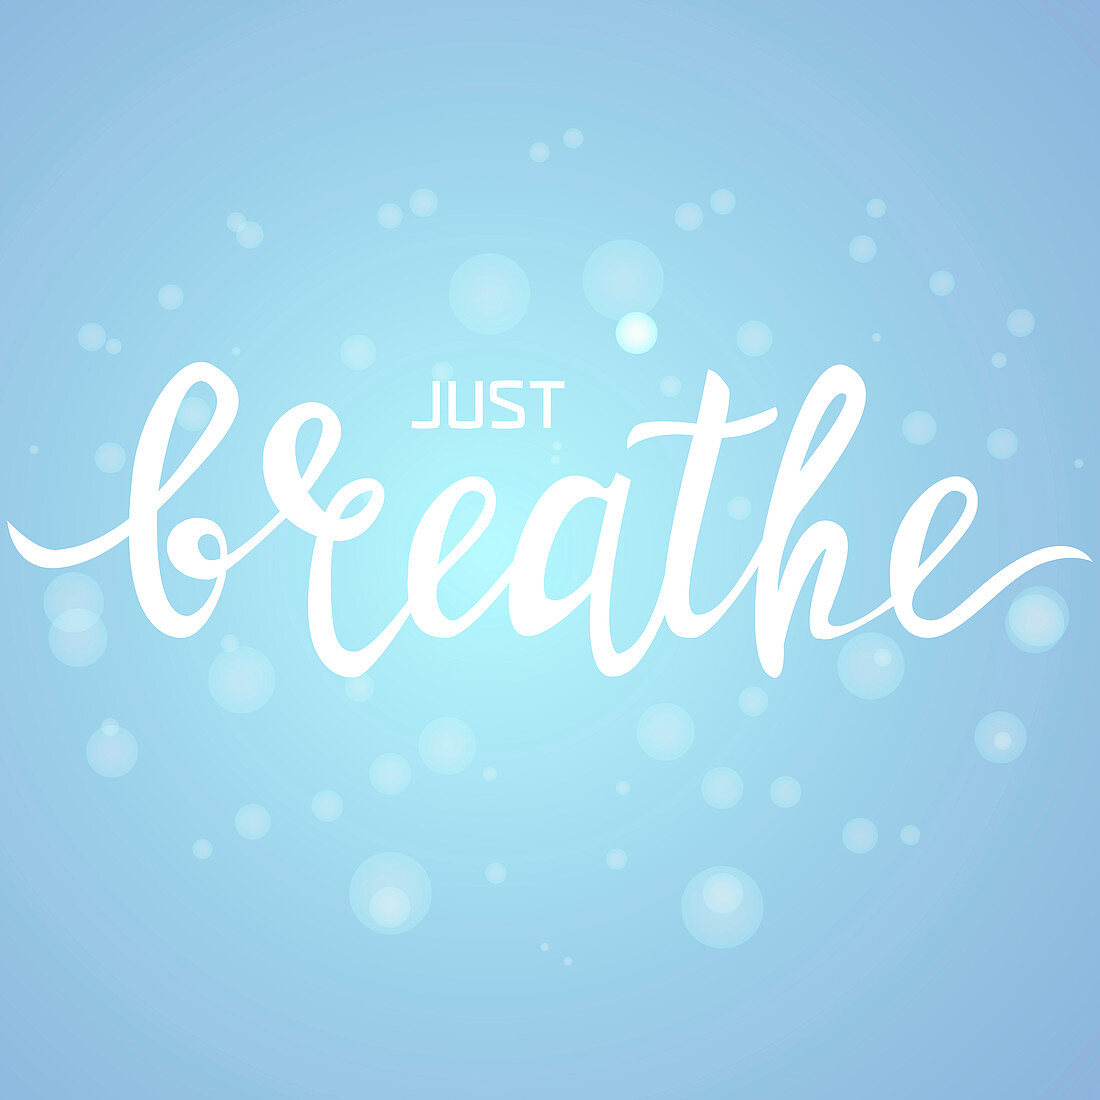 Just breathe, conceptual illustration